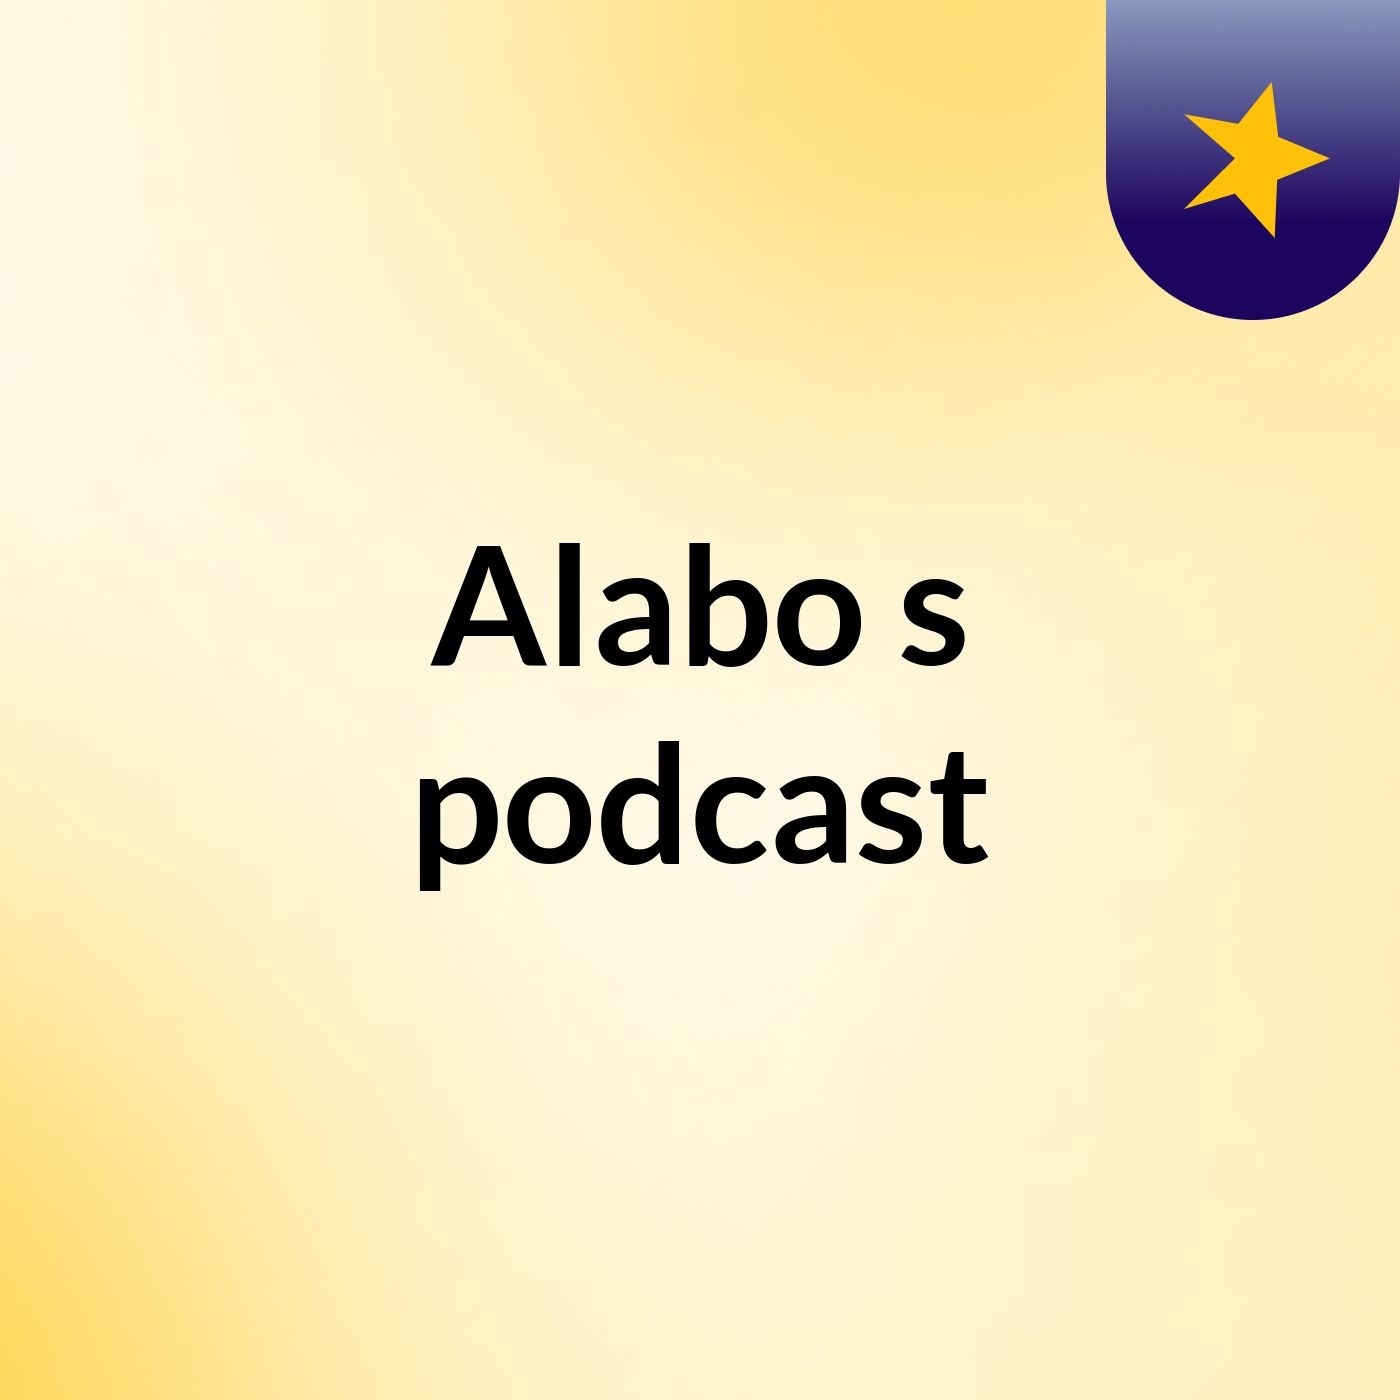 Alabo's podcast